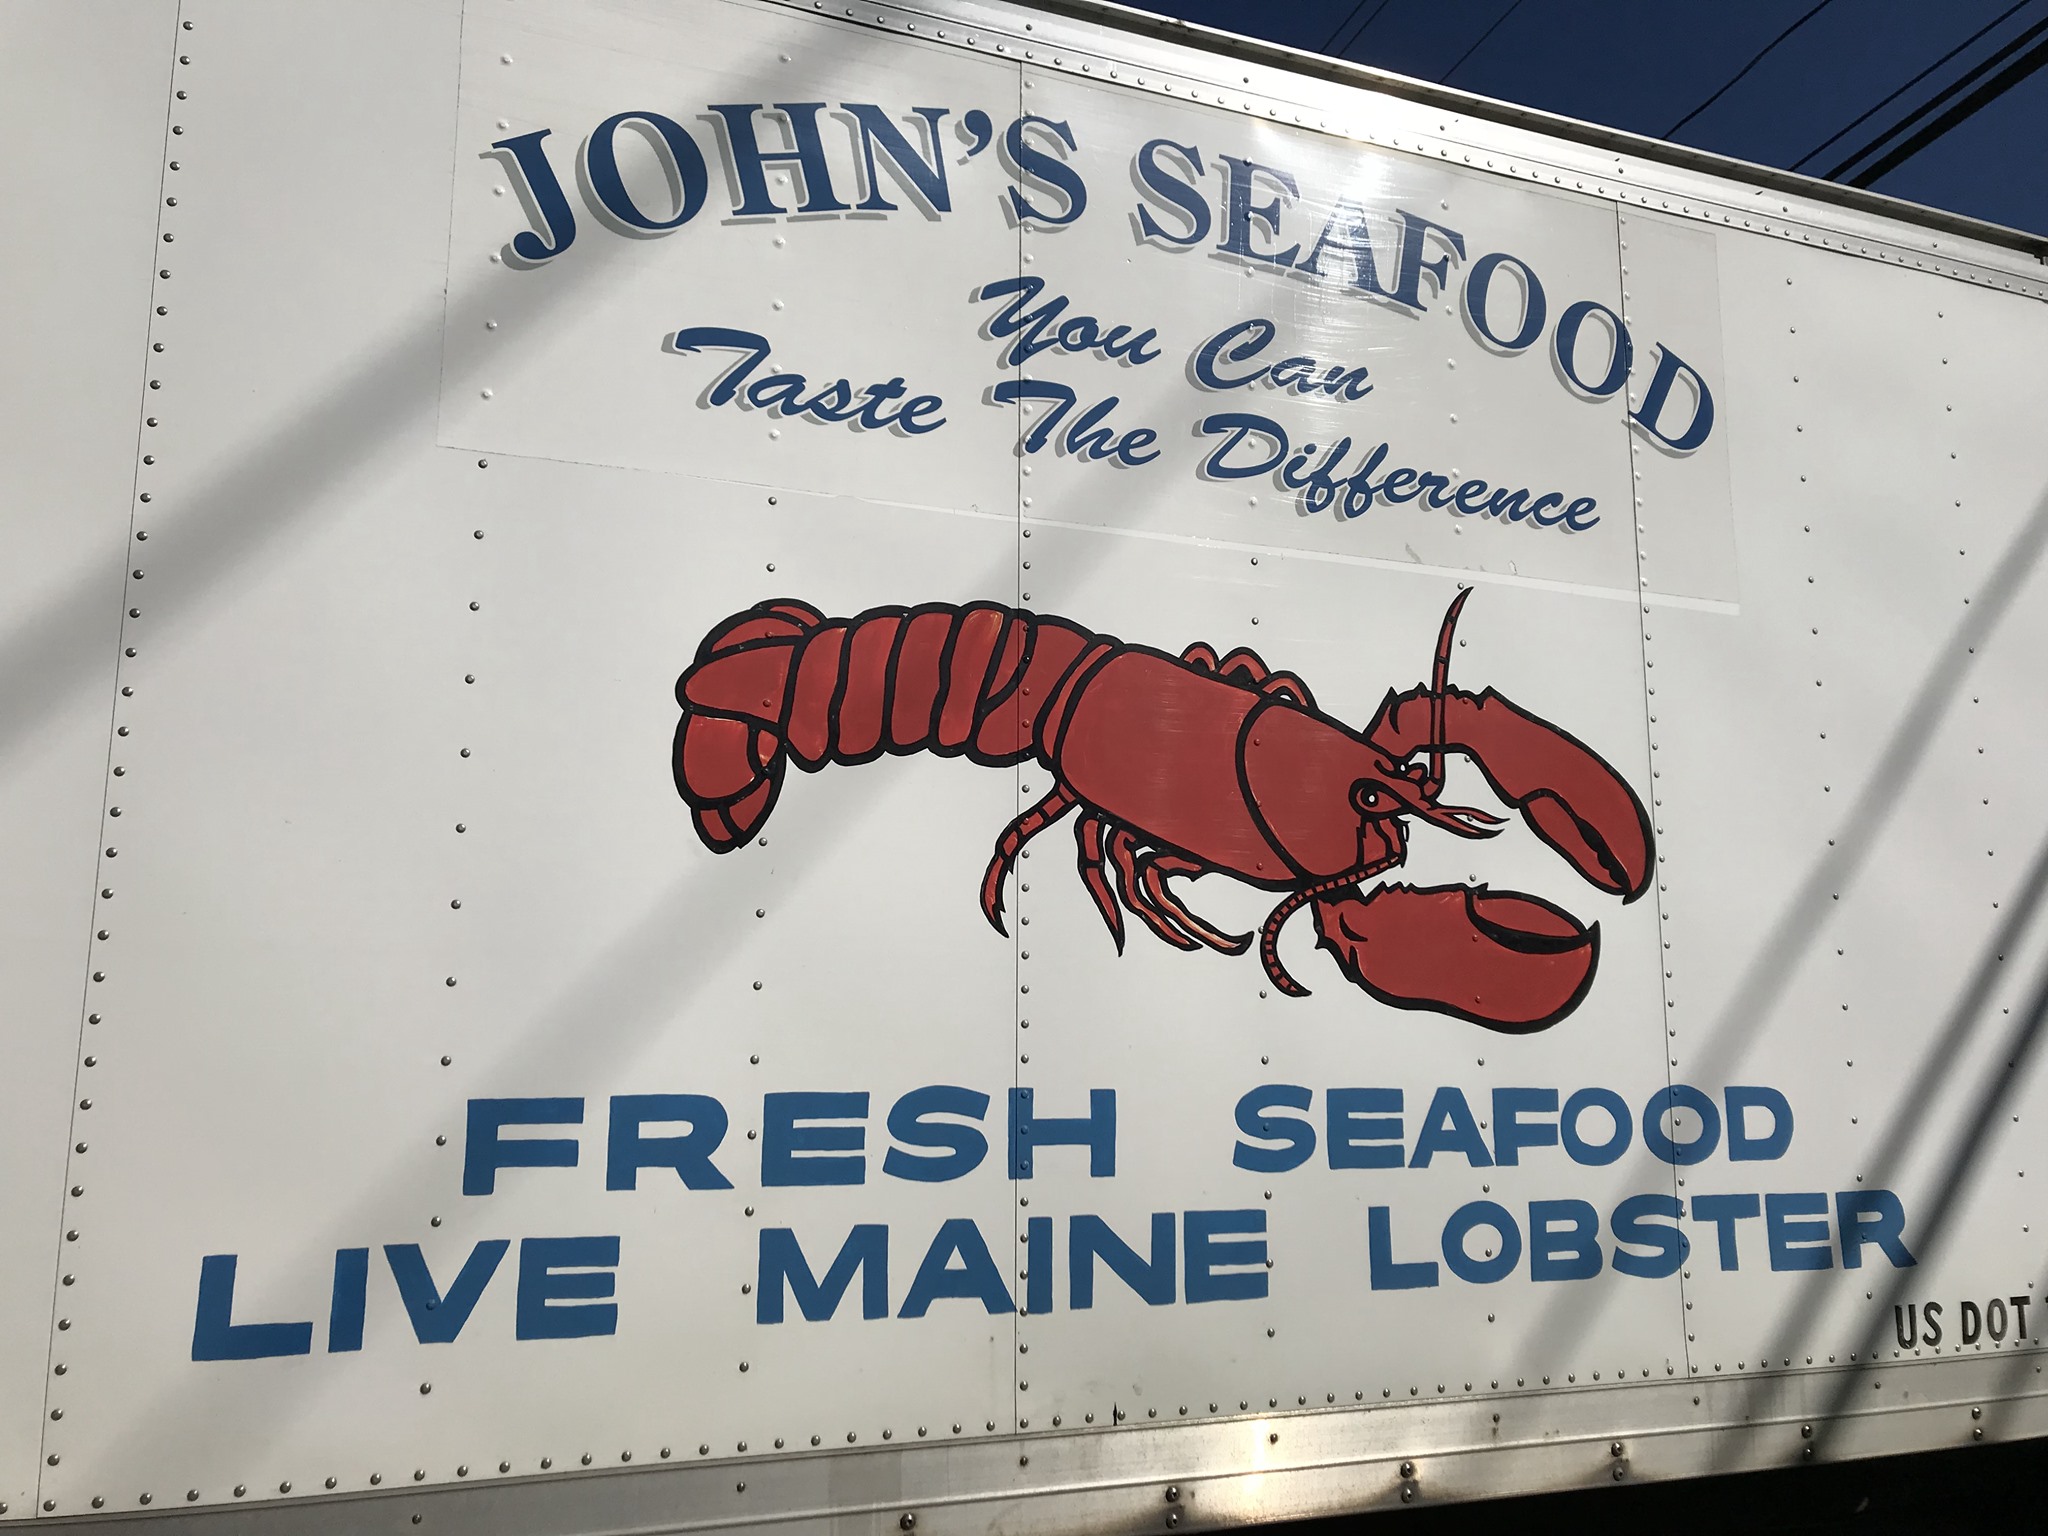 Johns Seafood Truck Returns To Syracuses Eastern Suburbs Next Week